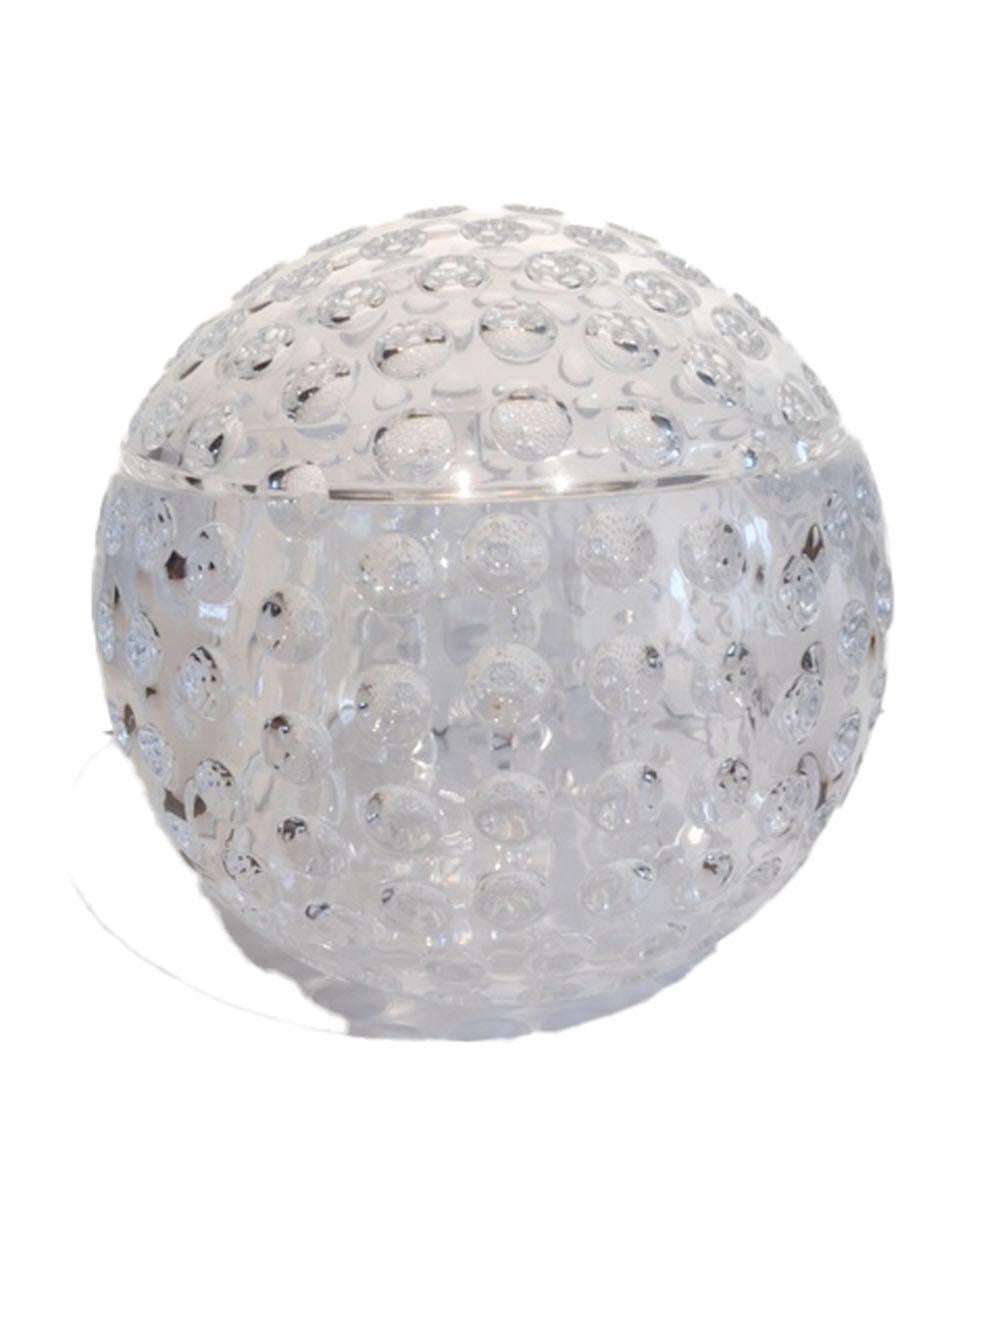 American Mid-Century Modern, Lucite Golf Ball Ice Bucket by Grainware